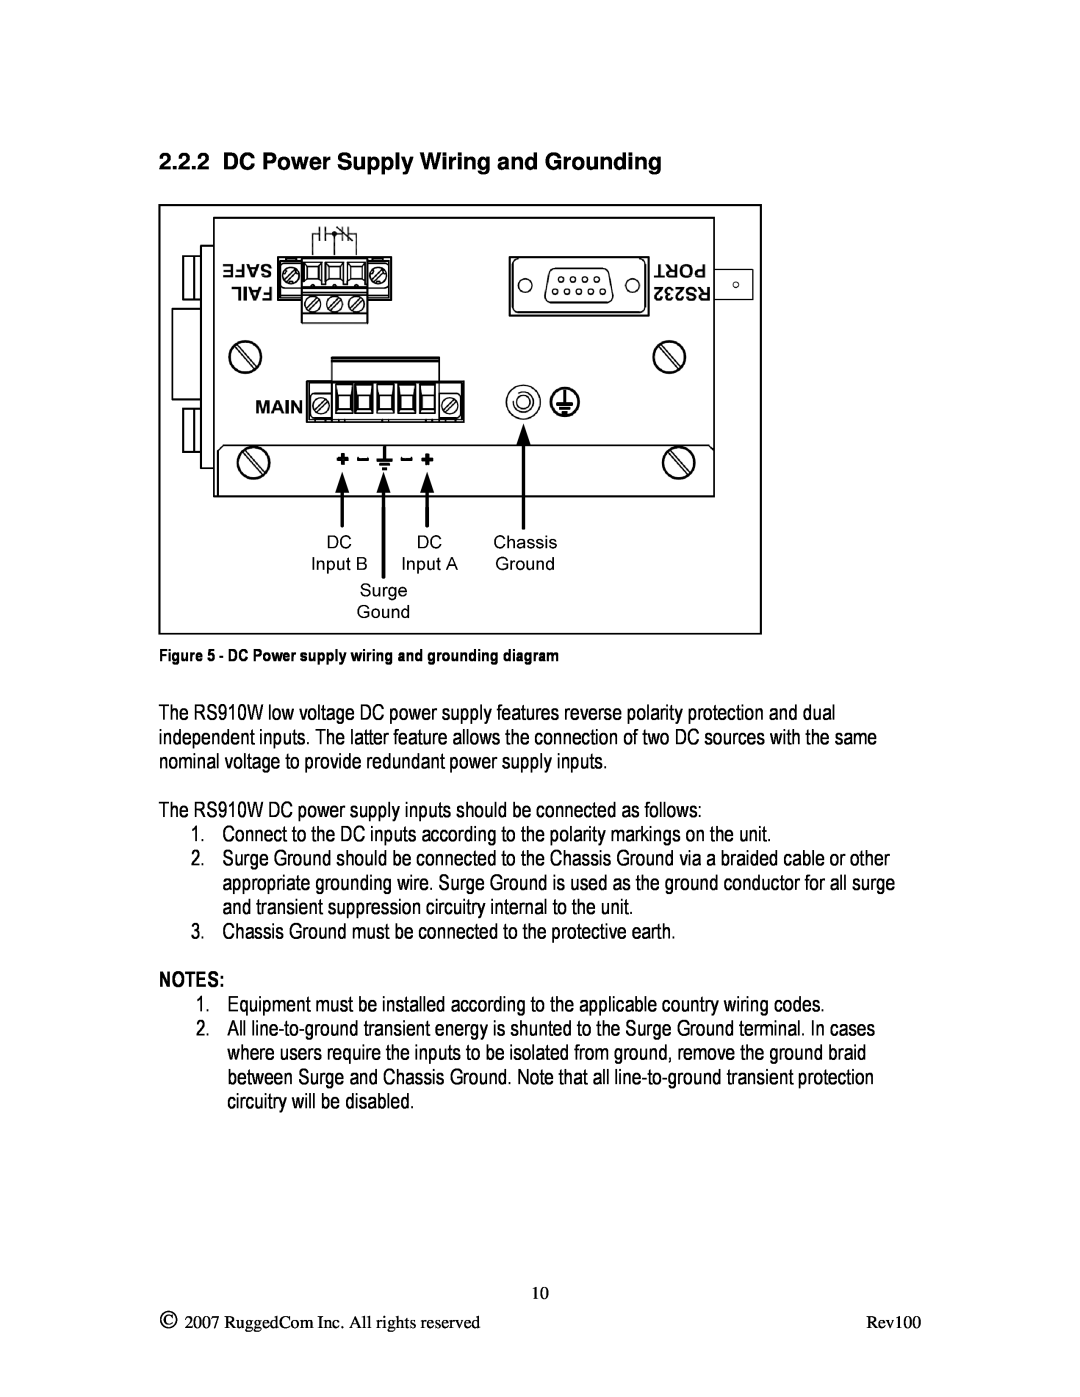 RuggedCom RS910W manual DC Power Supply Wiring and Grounding, DC Power supply wiring and grounding diagram 